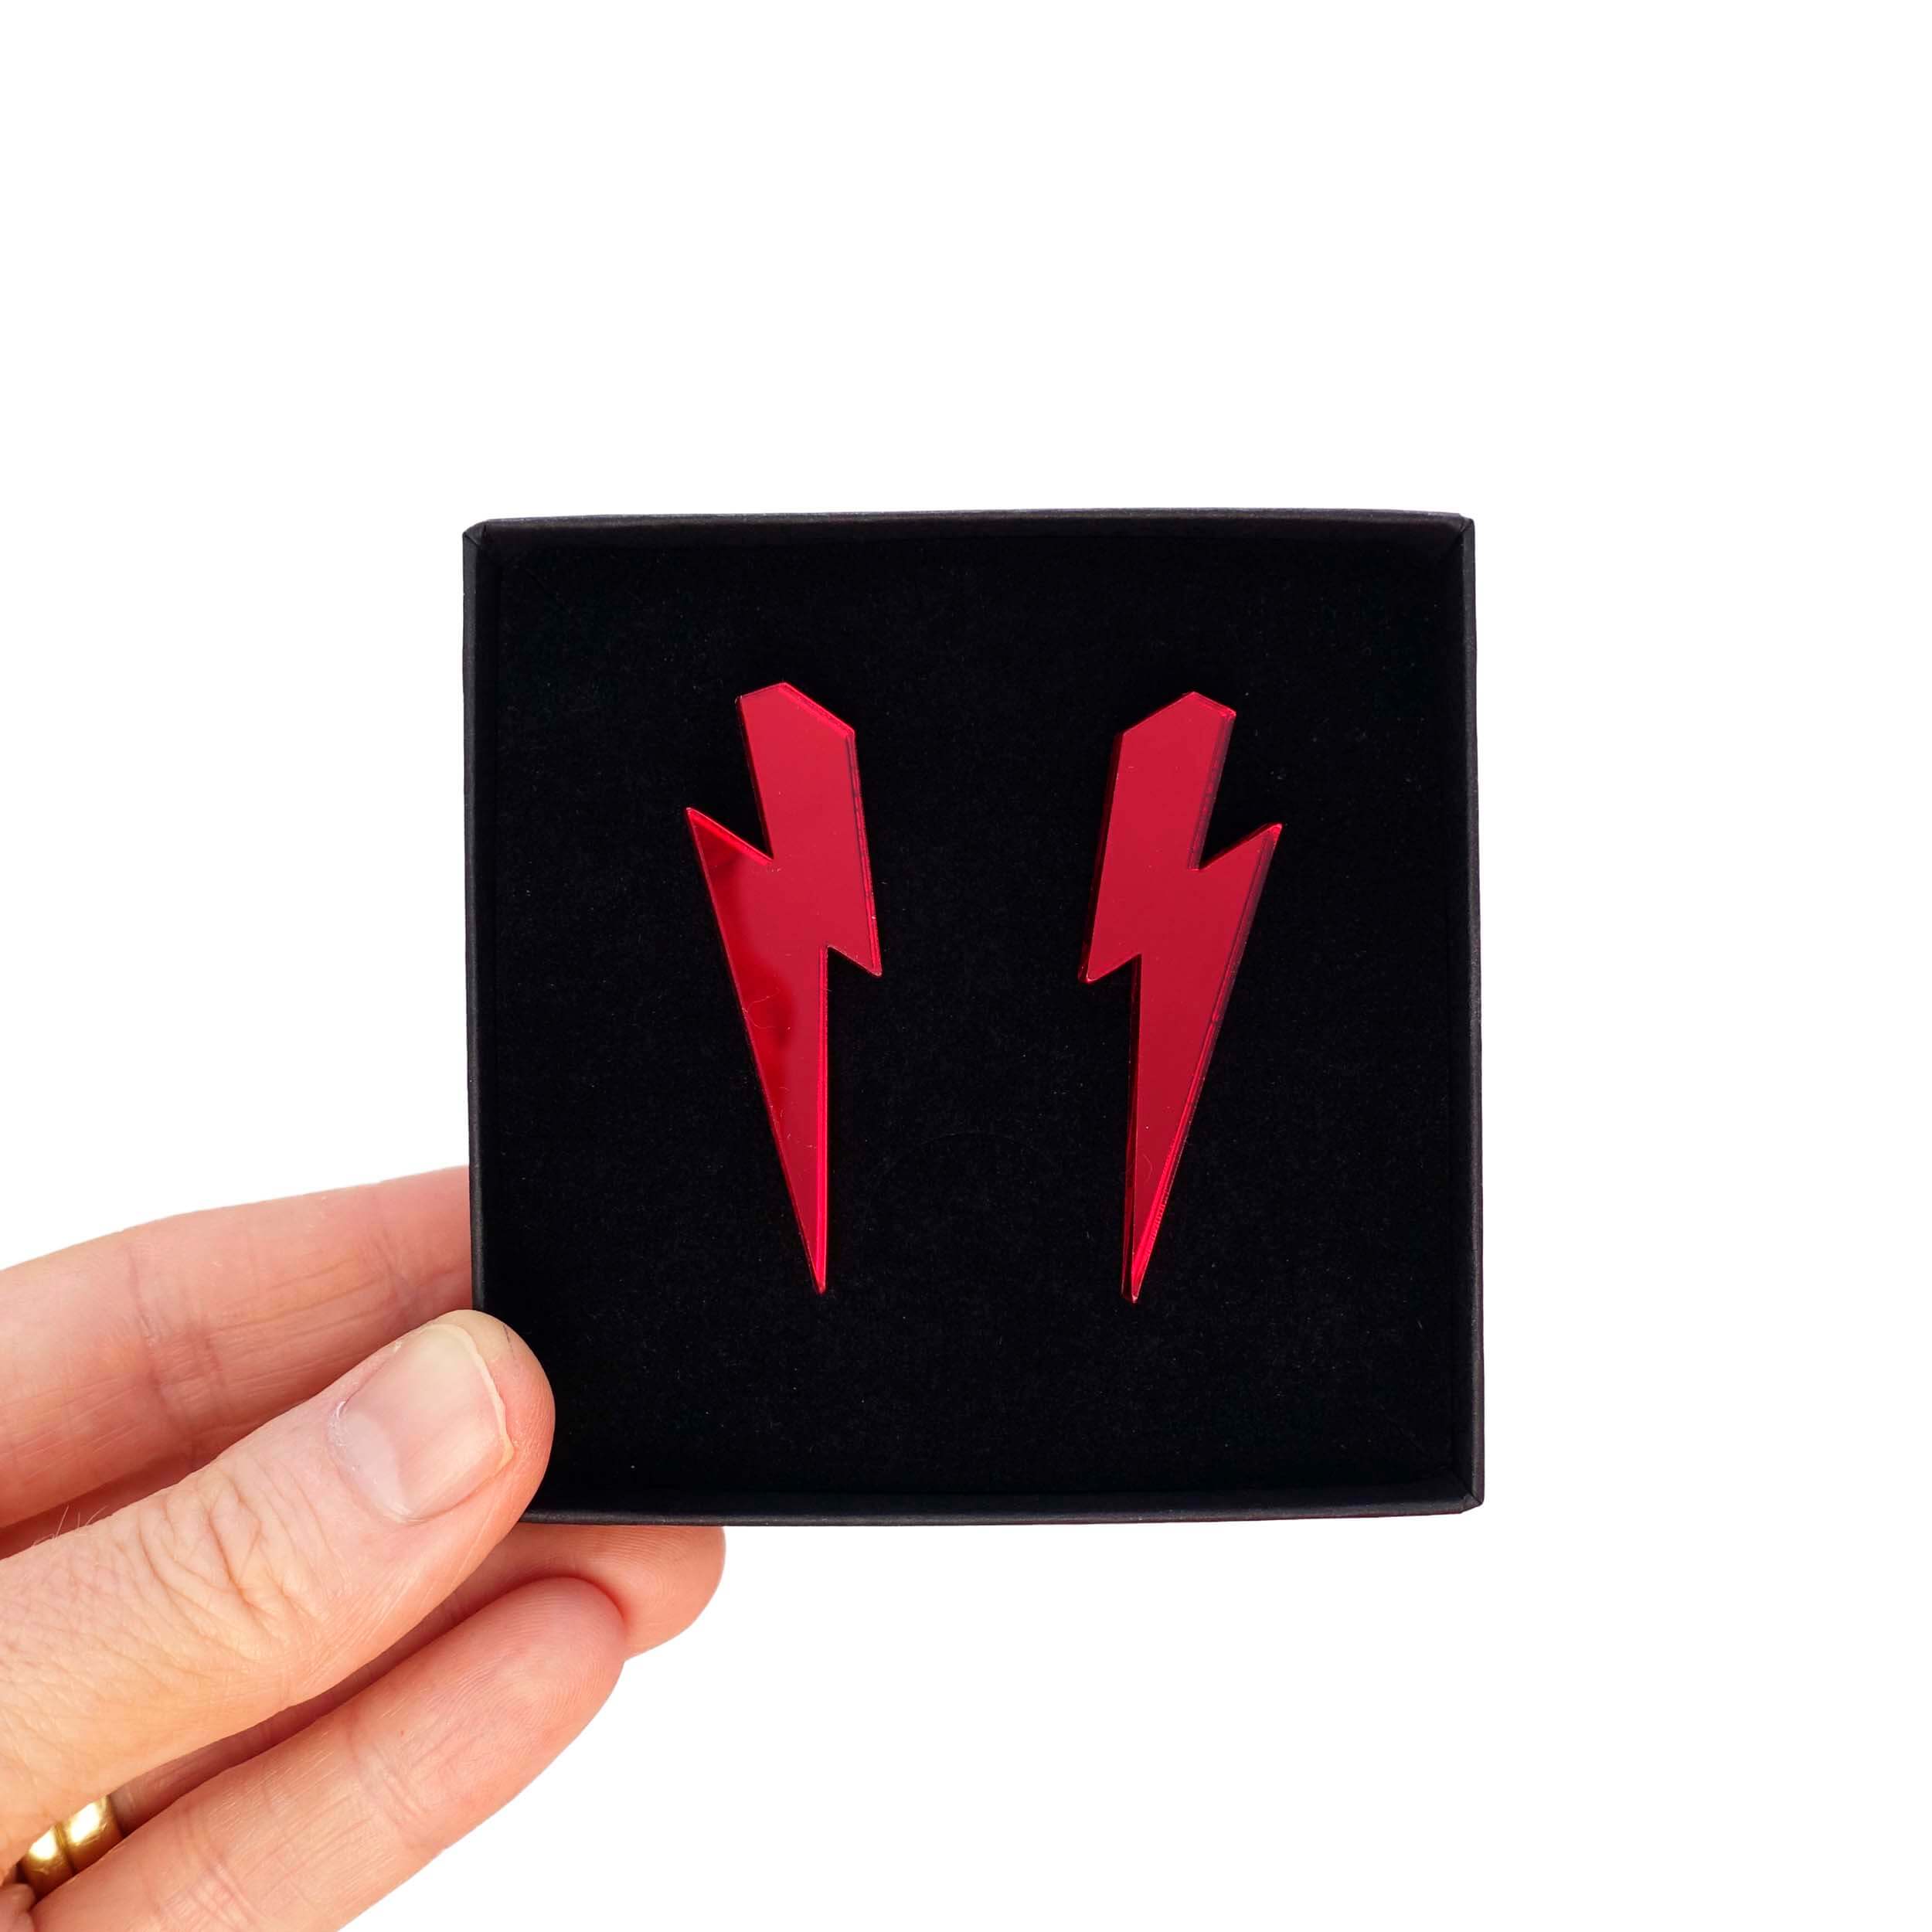 Large lightning bolt earrings in ruby red mirror. 